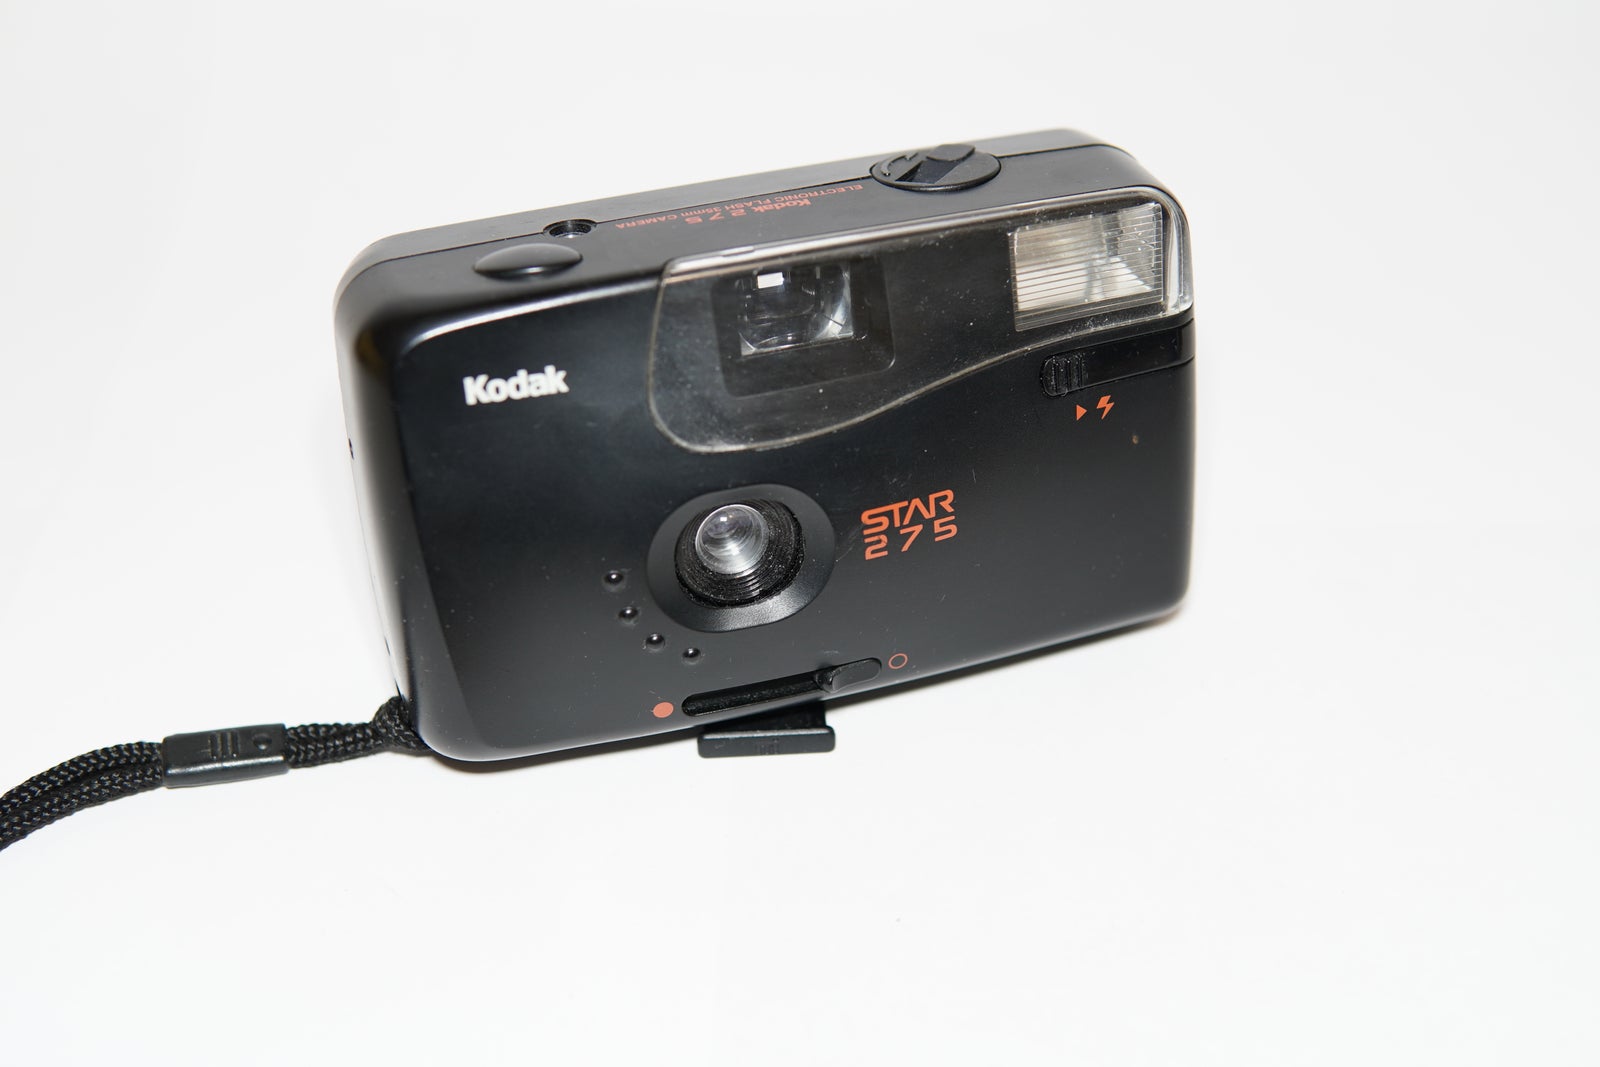 Kodak, star 275